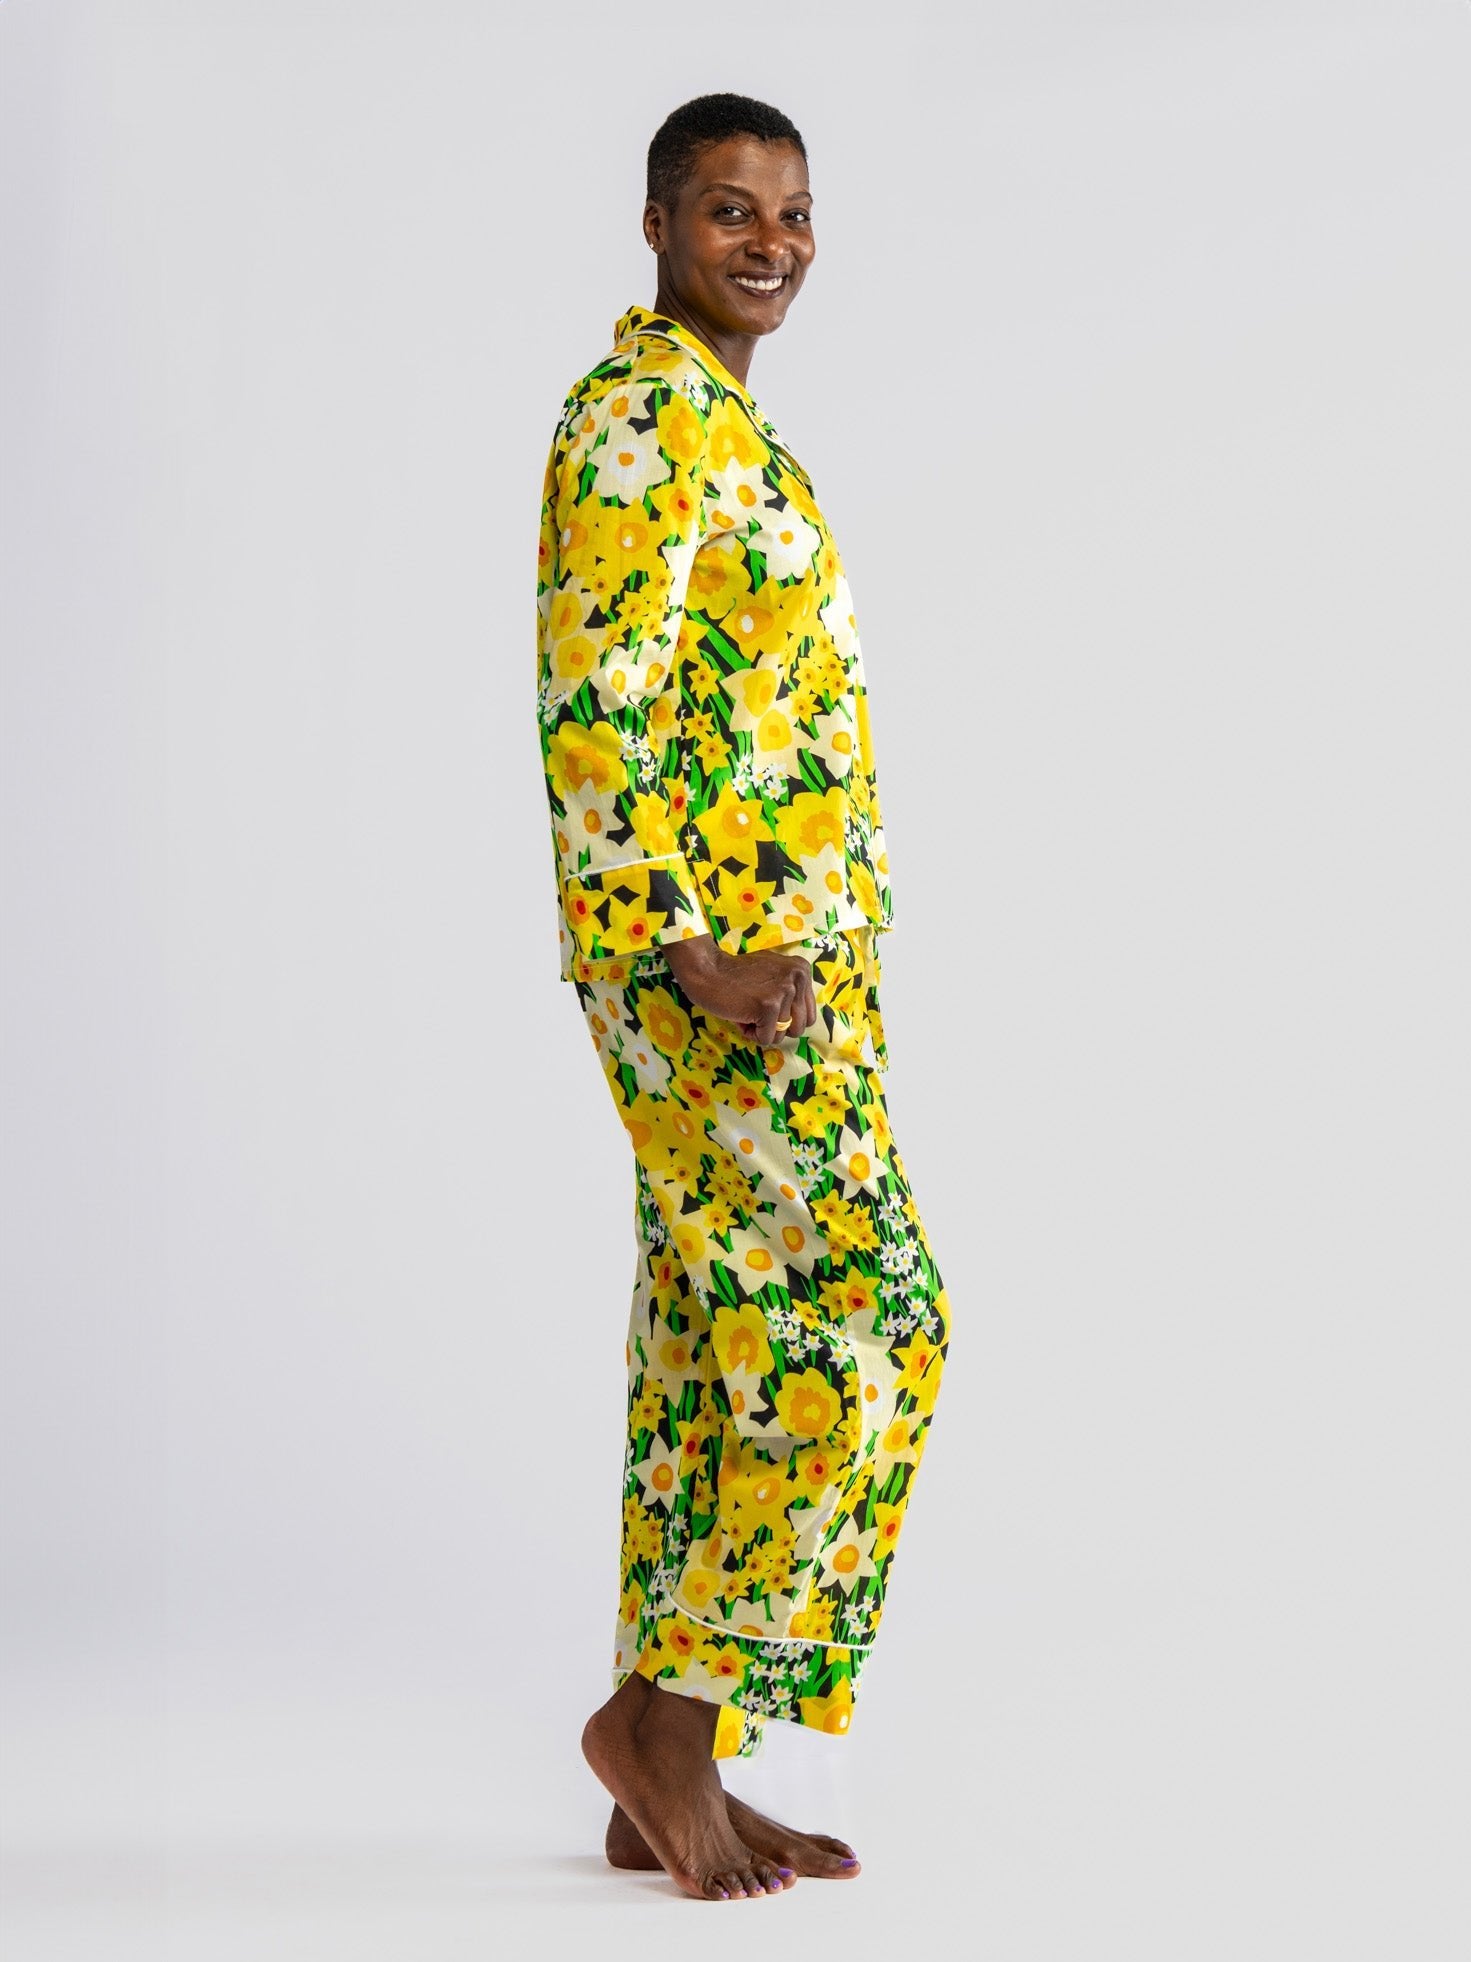 JOSEPHINE pajama set Daffodils - Lesley Evers - cotton PJs - daffodils - daffodils yellow